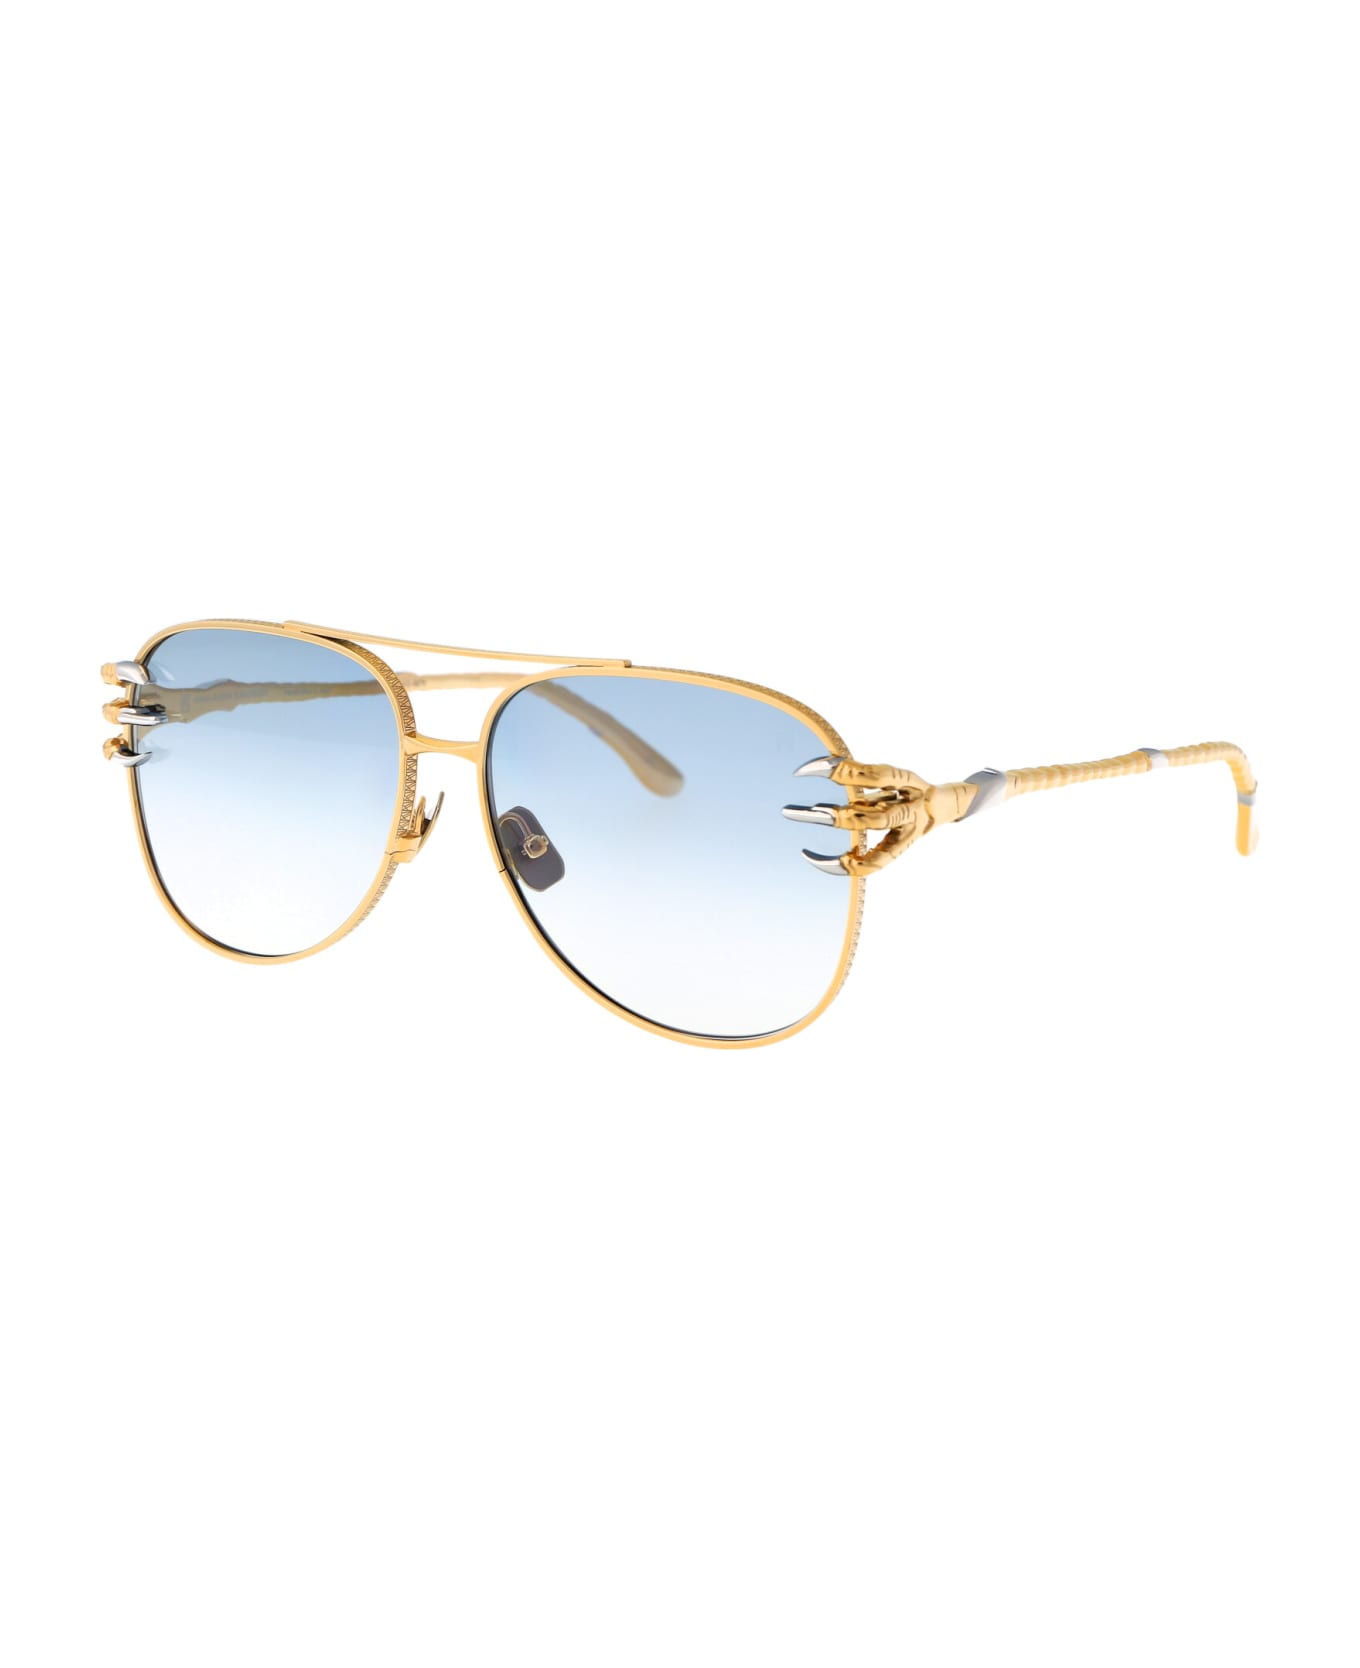 Anna-Karin Karlsson Claw Voyage Sunglasses - Gold Blue lens